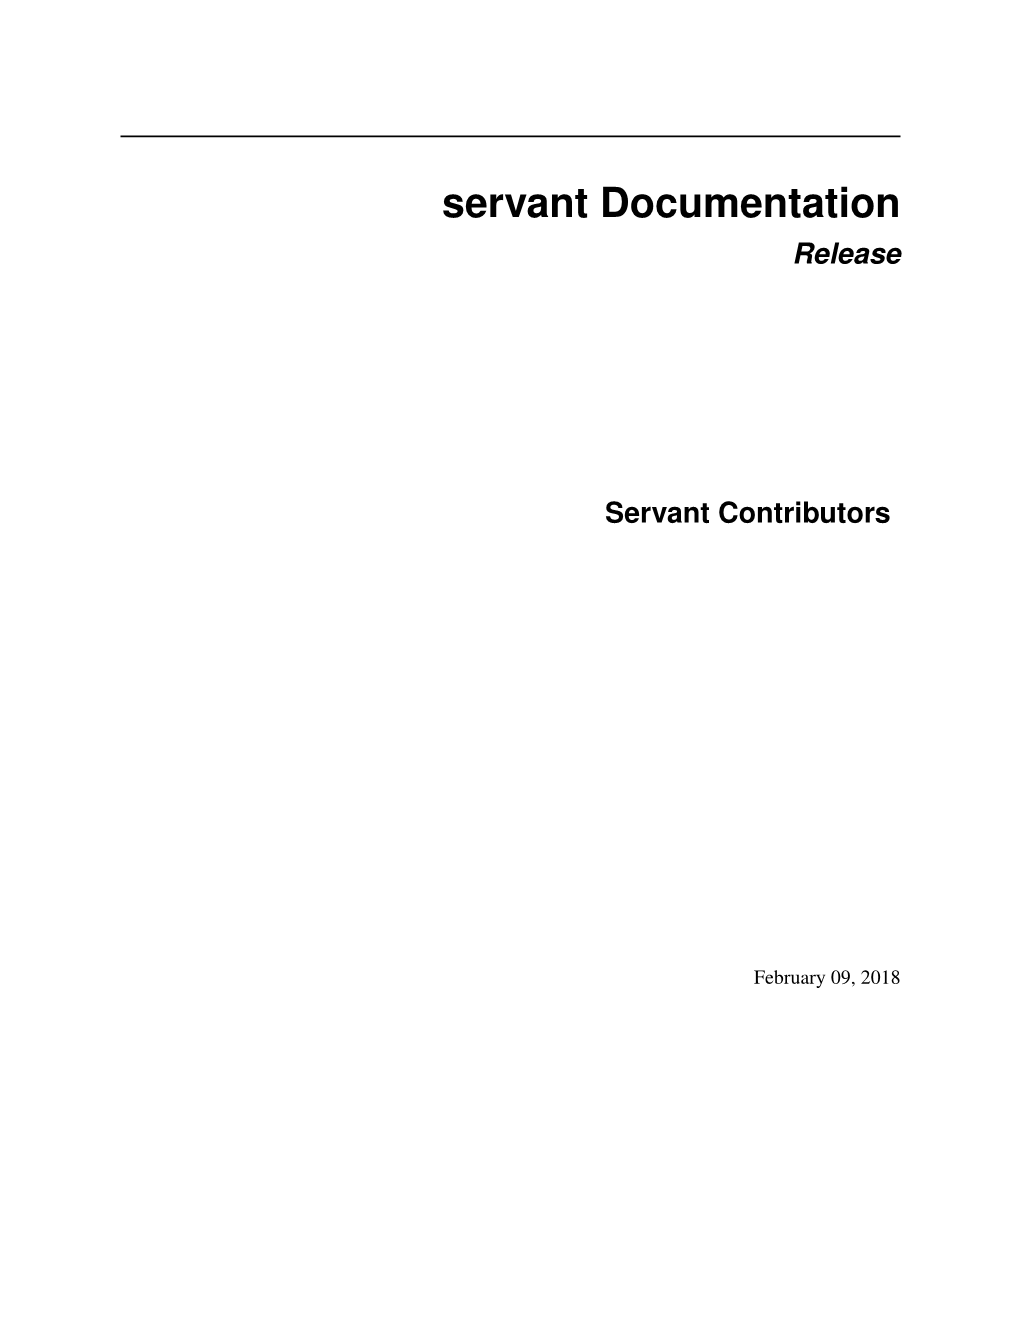 Servant Documentation Release